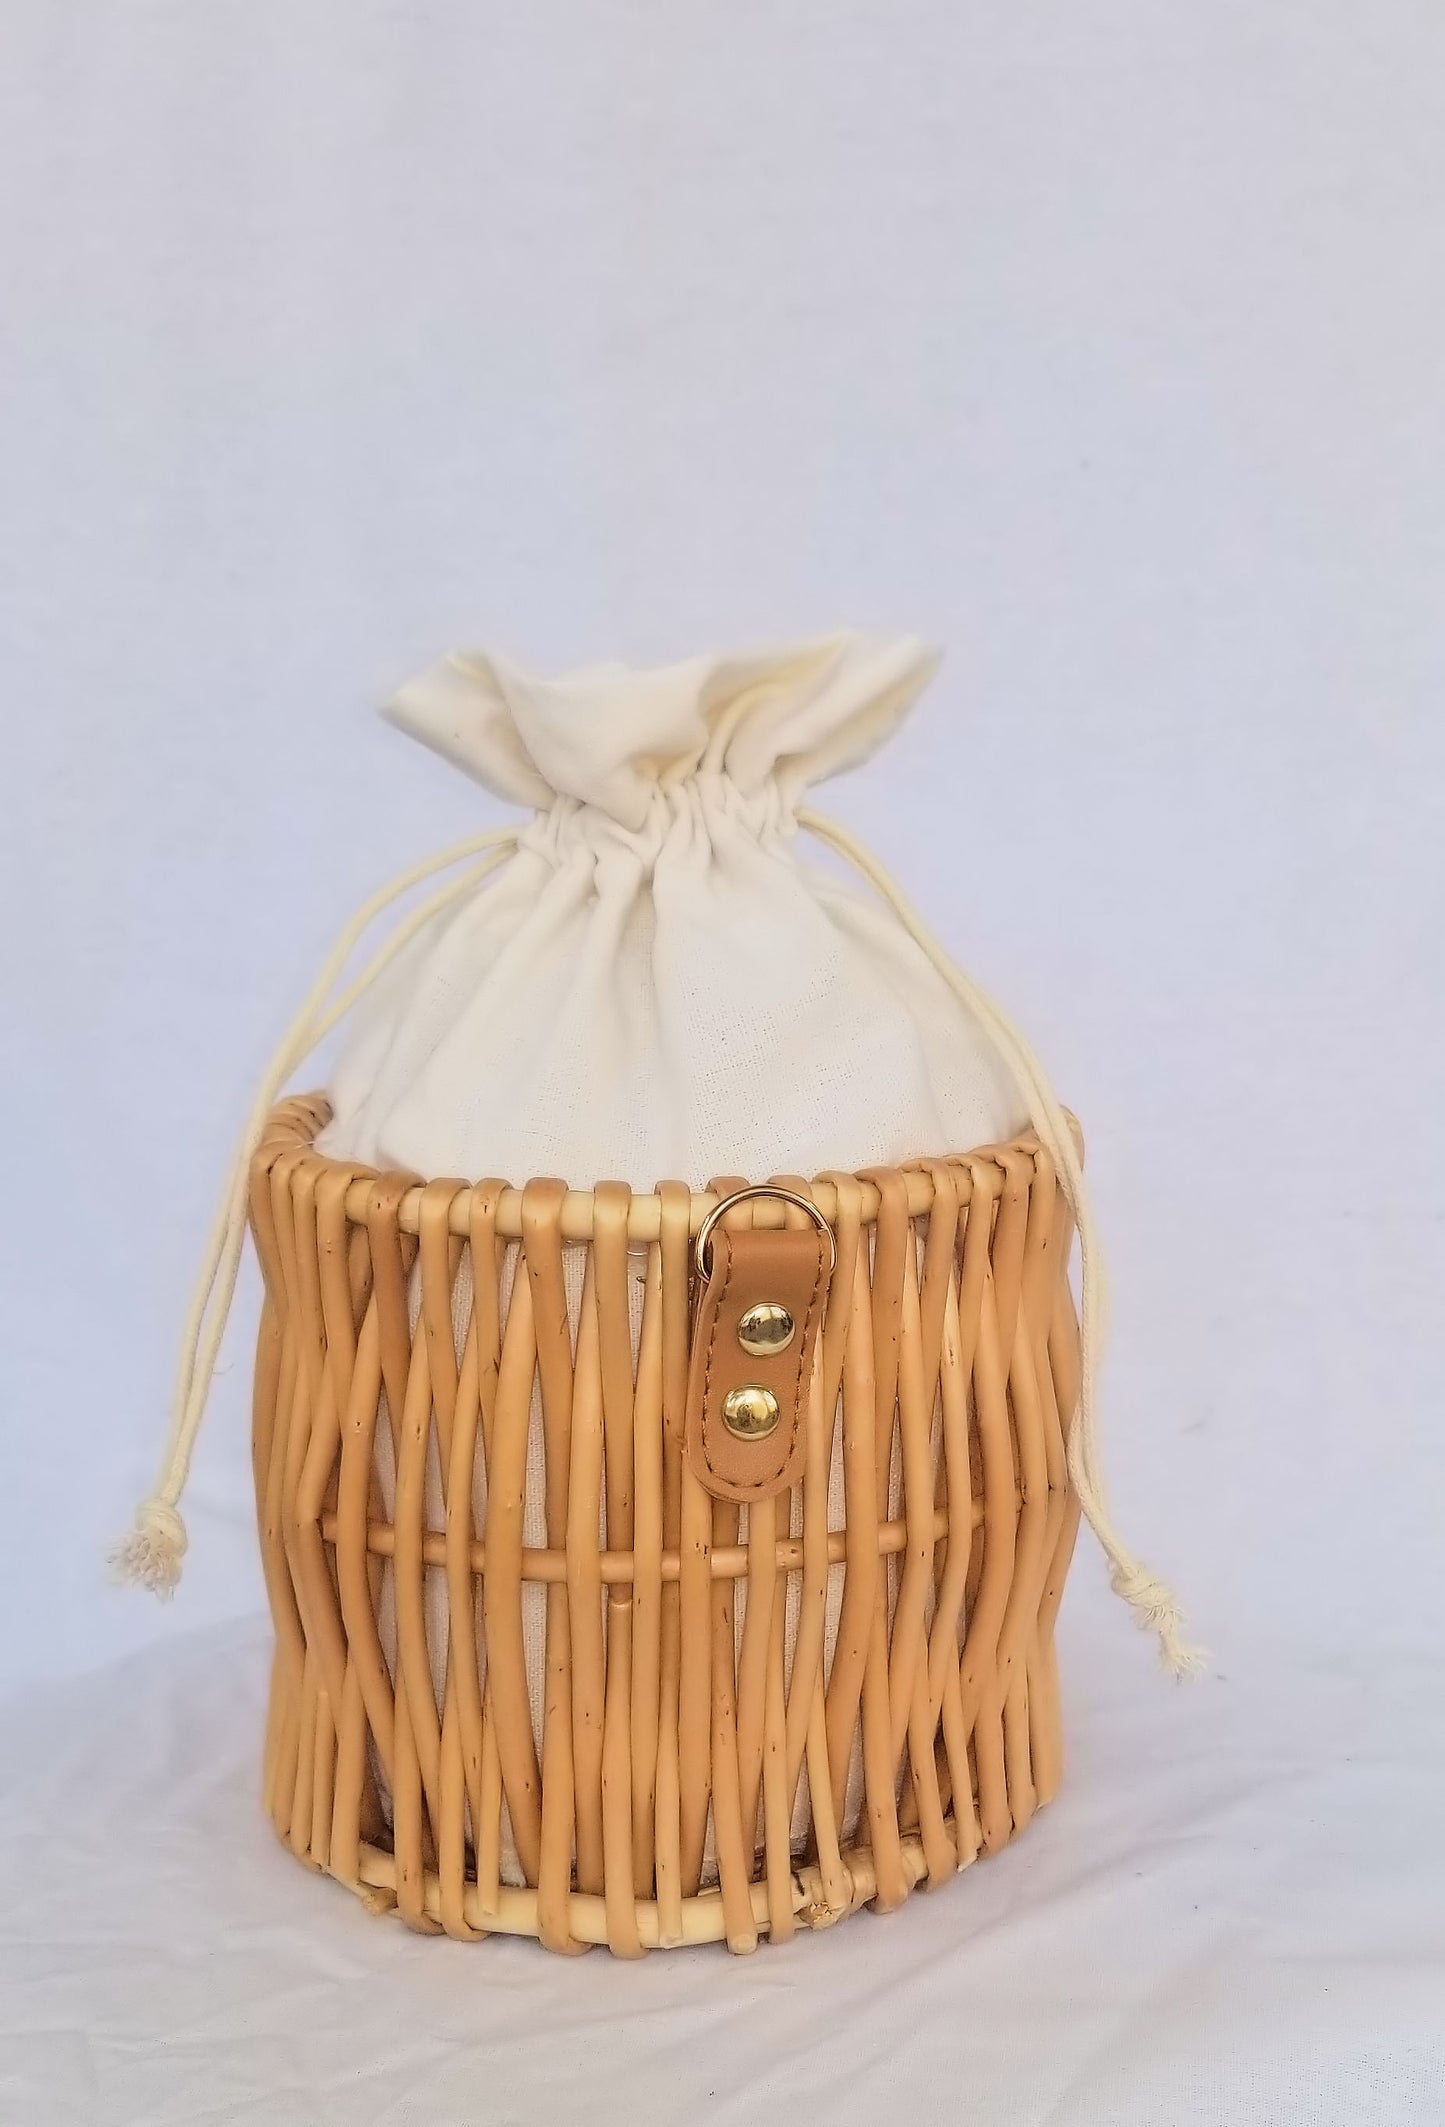 The Dali Wicker Handbag